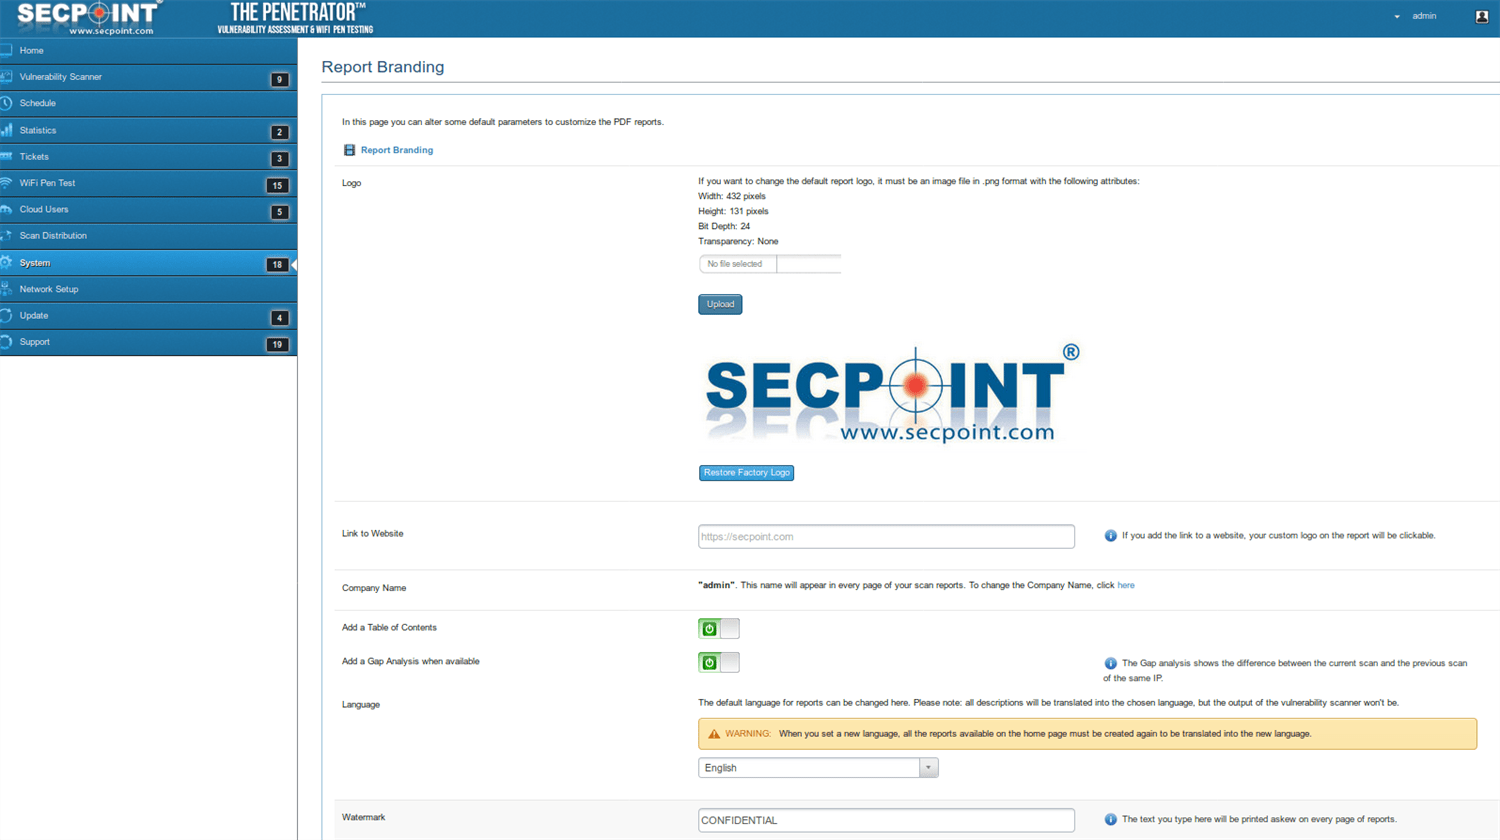 SecPoint Penetrator S9 - 2 IP 3 Year Renewal - SecPoint